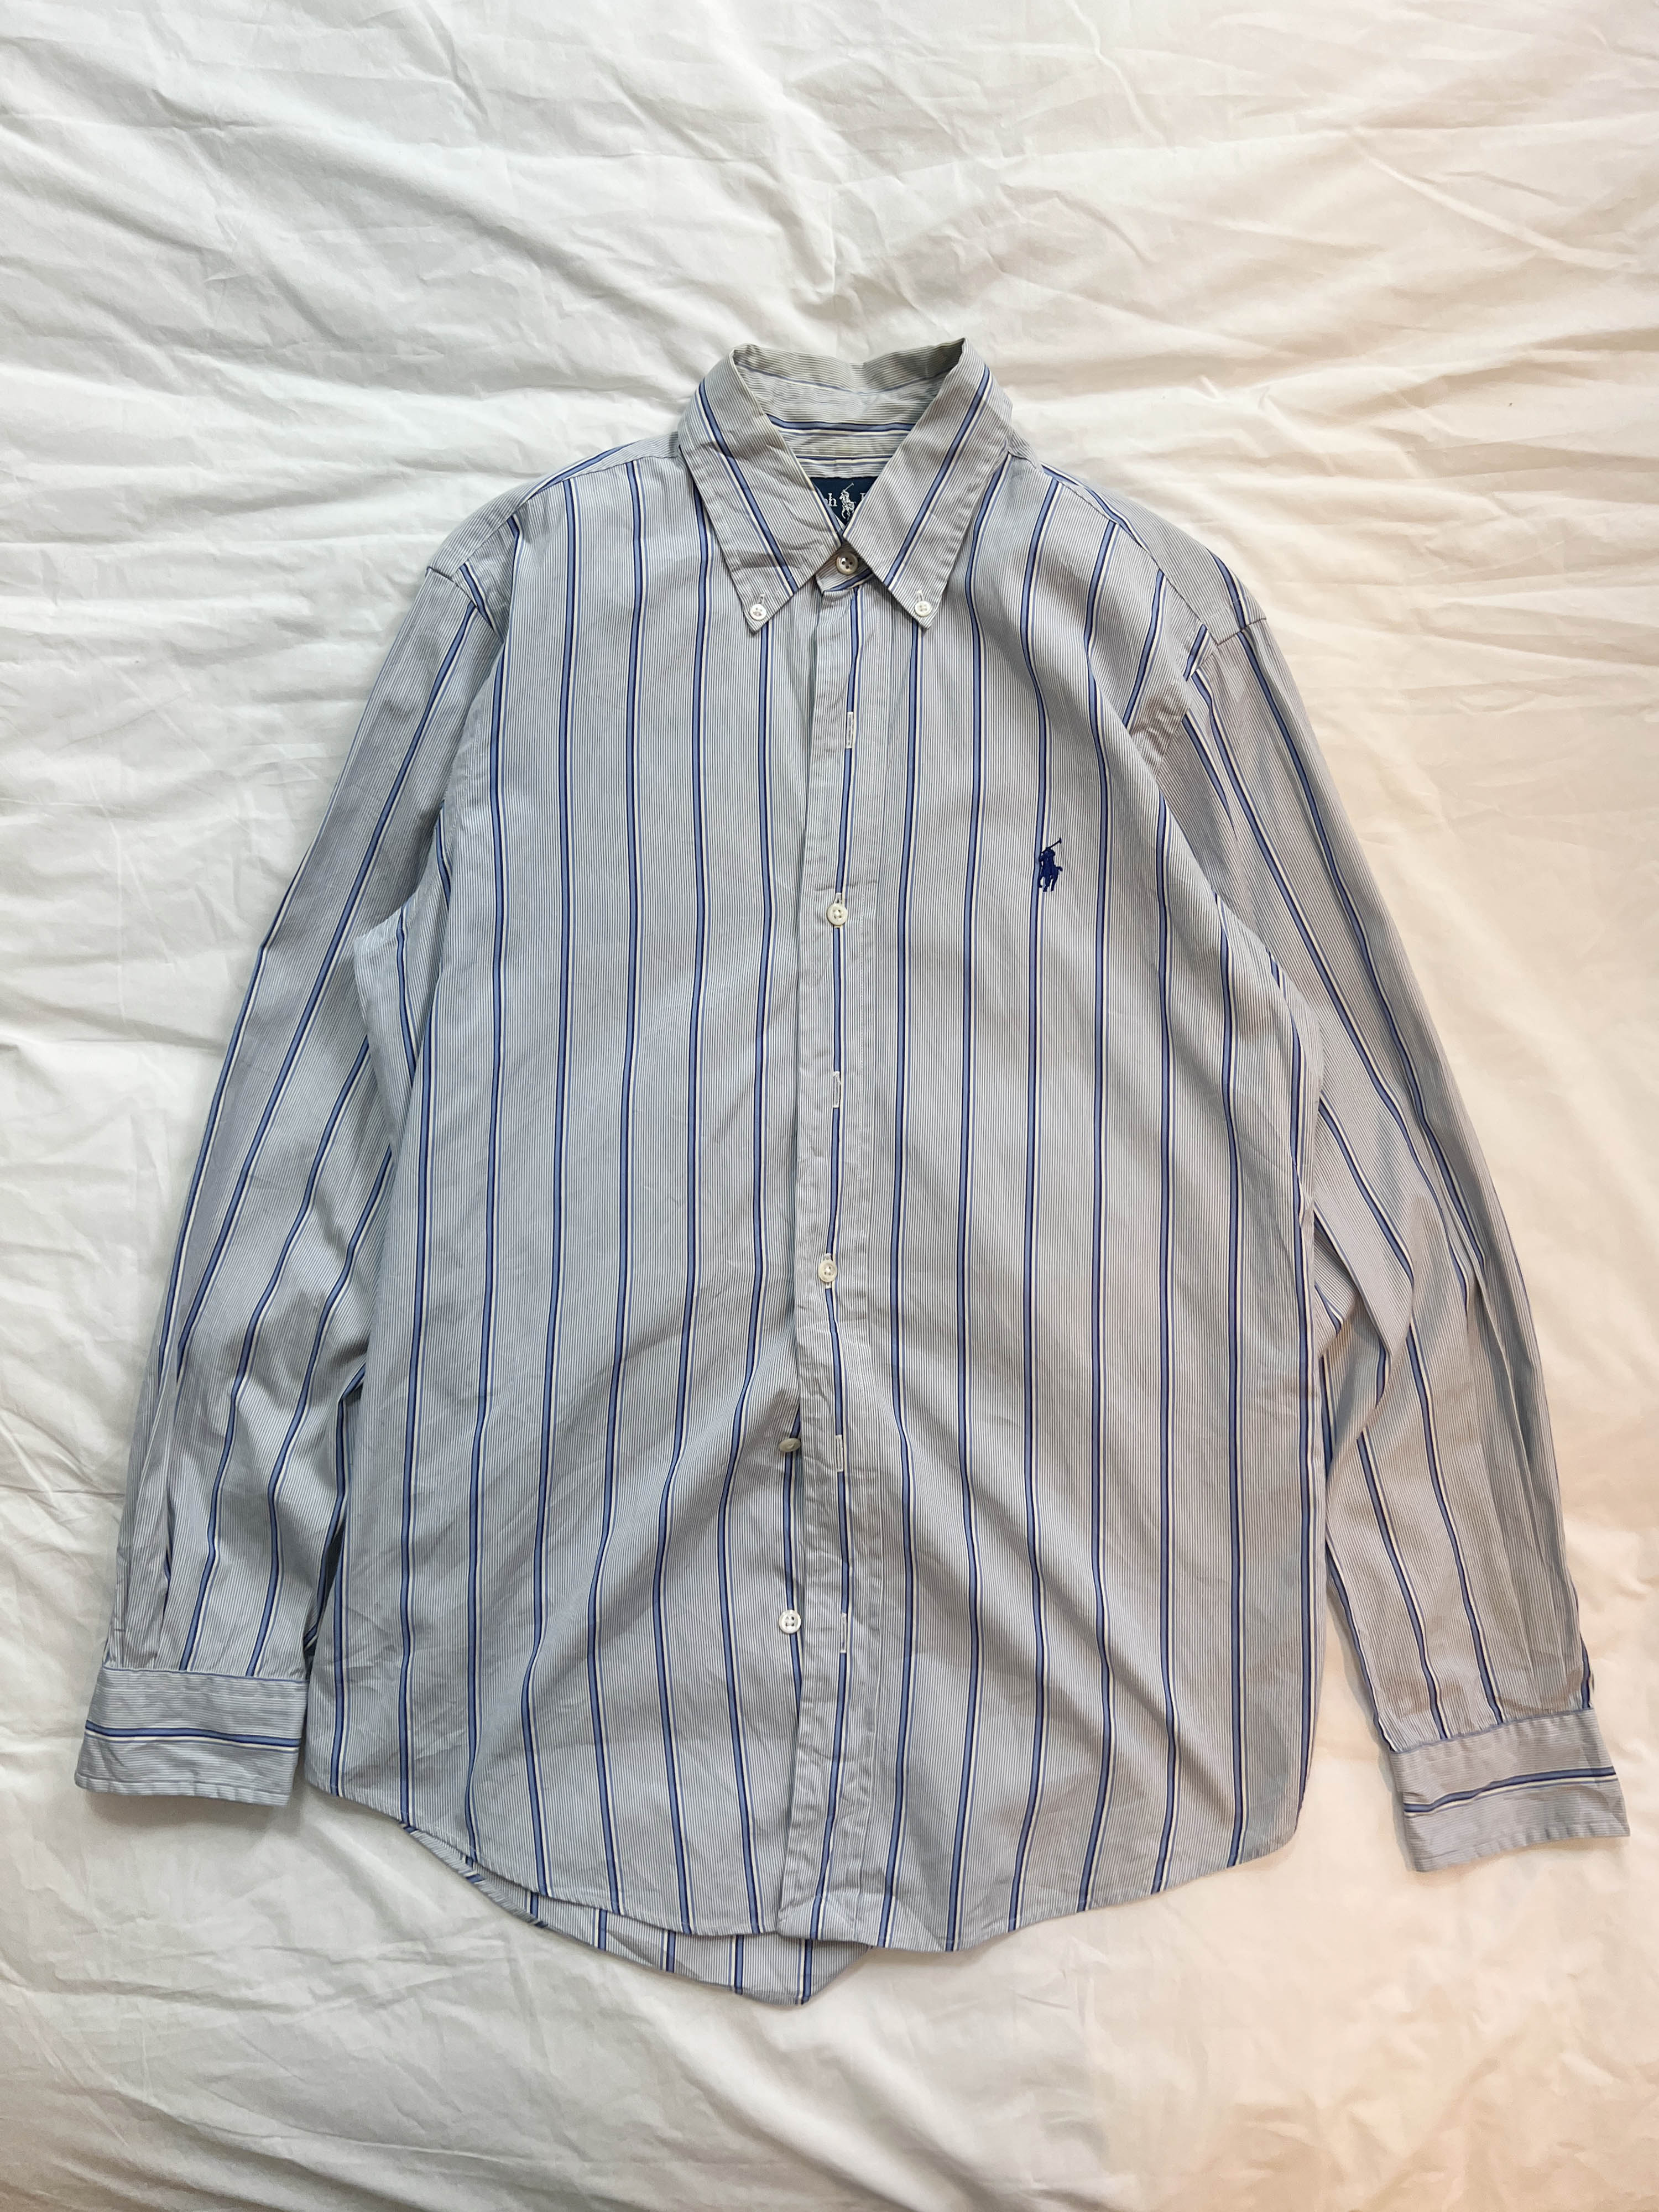 Polo by Ralph Lauren stripe shirts